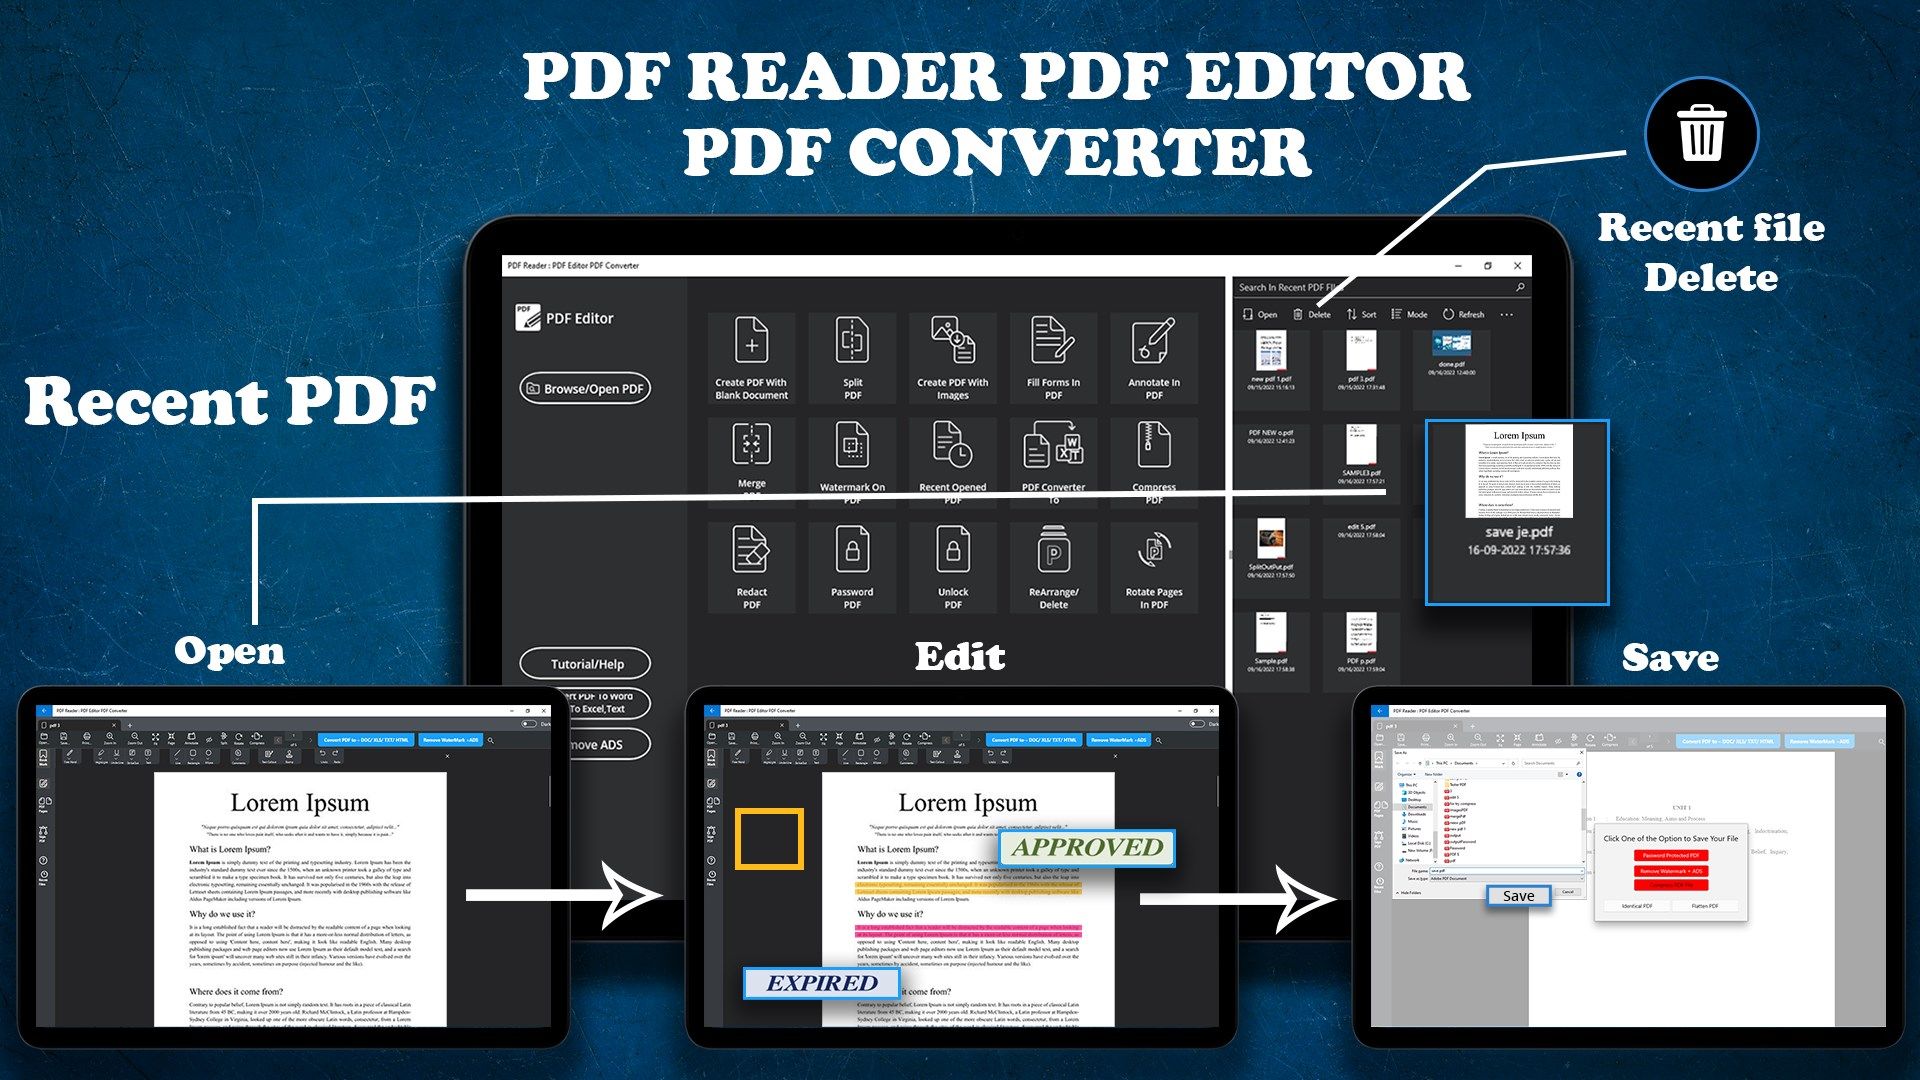 PDF Reader PDF Editor: PDF Converter